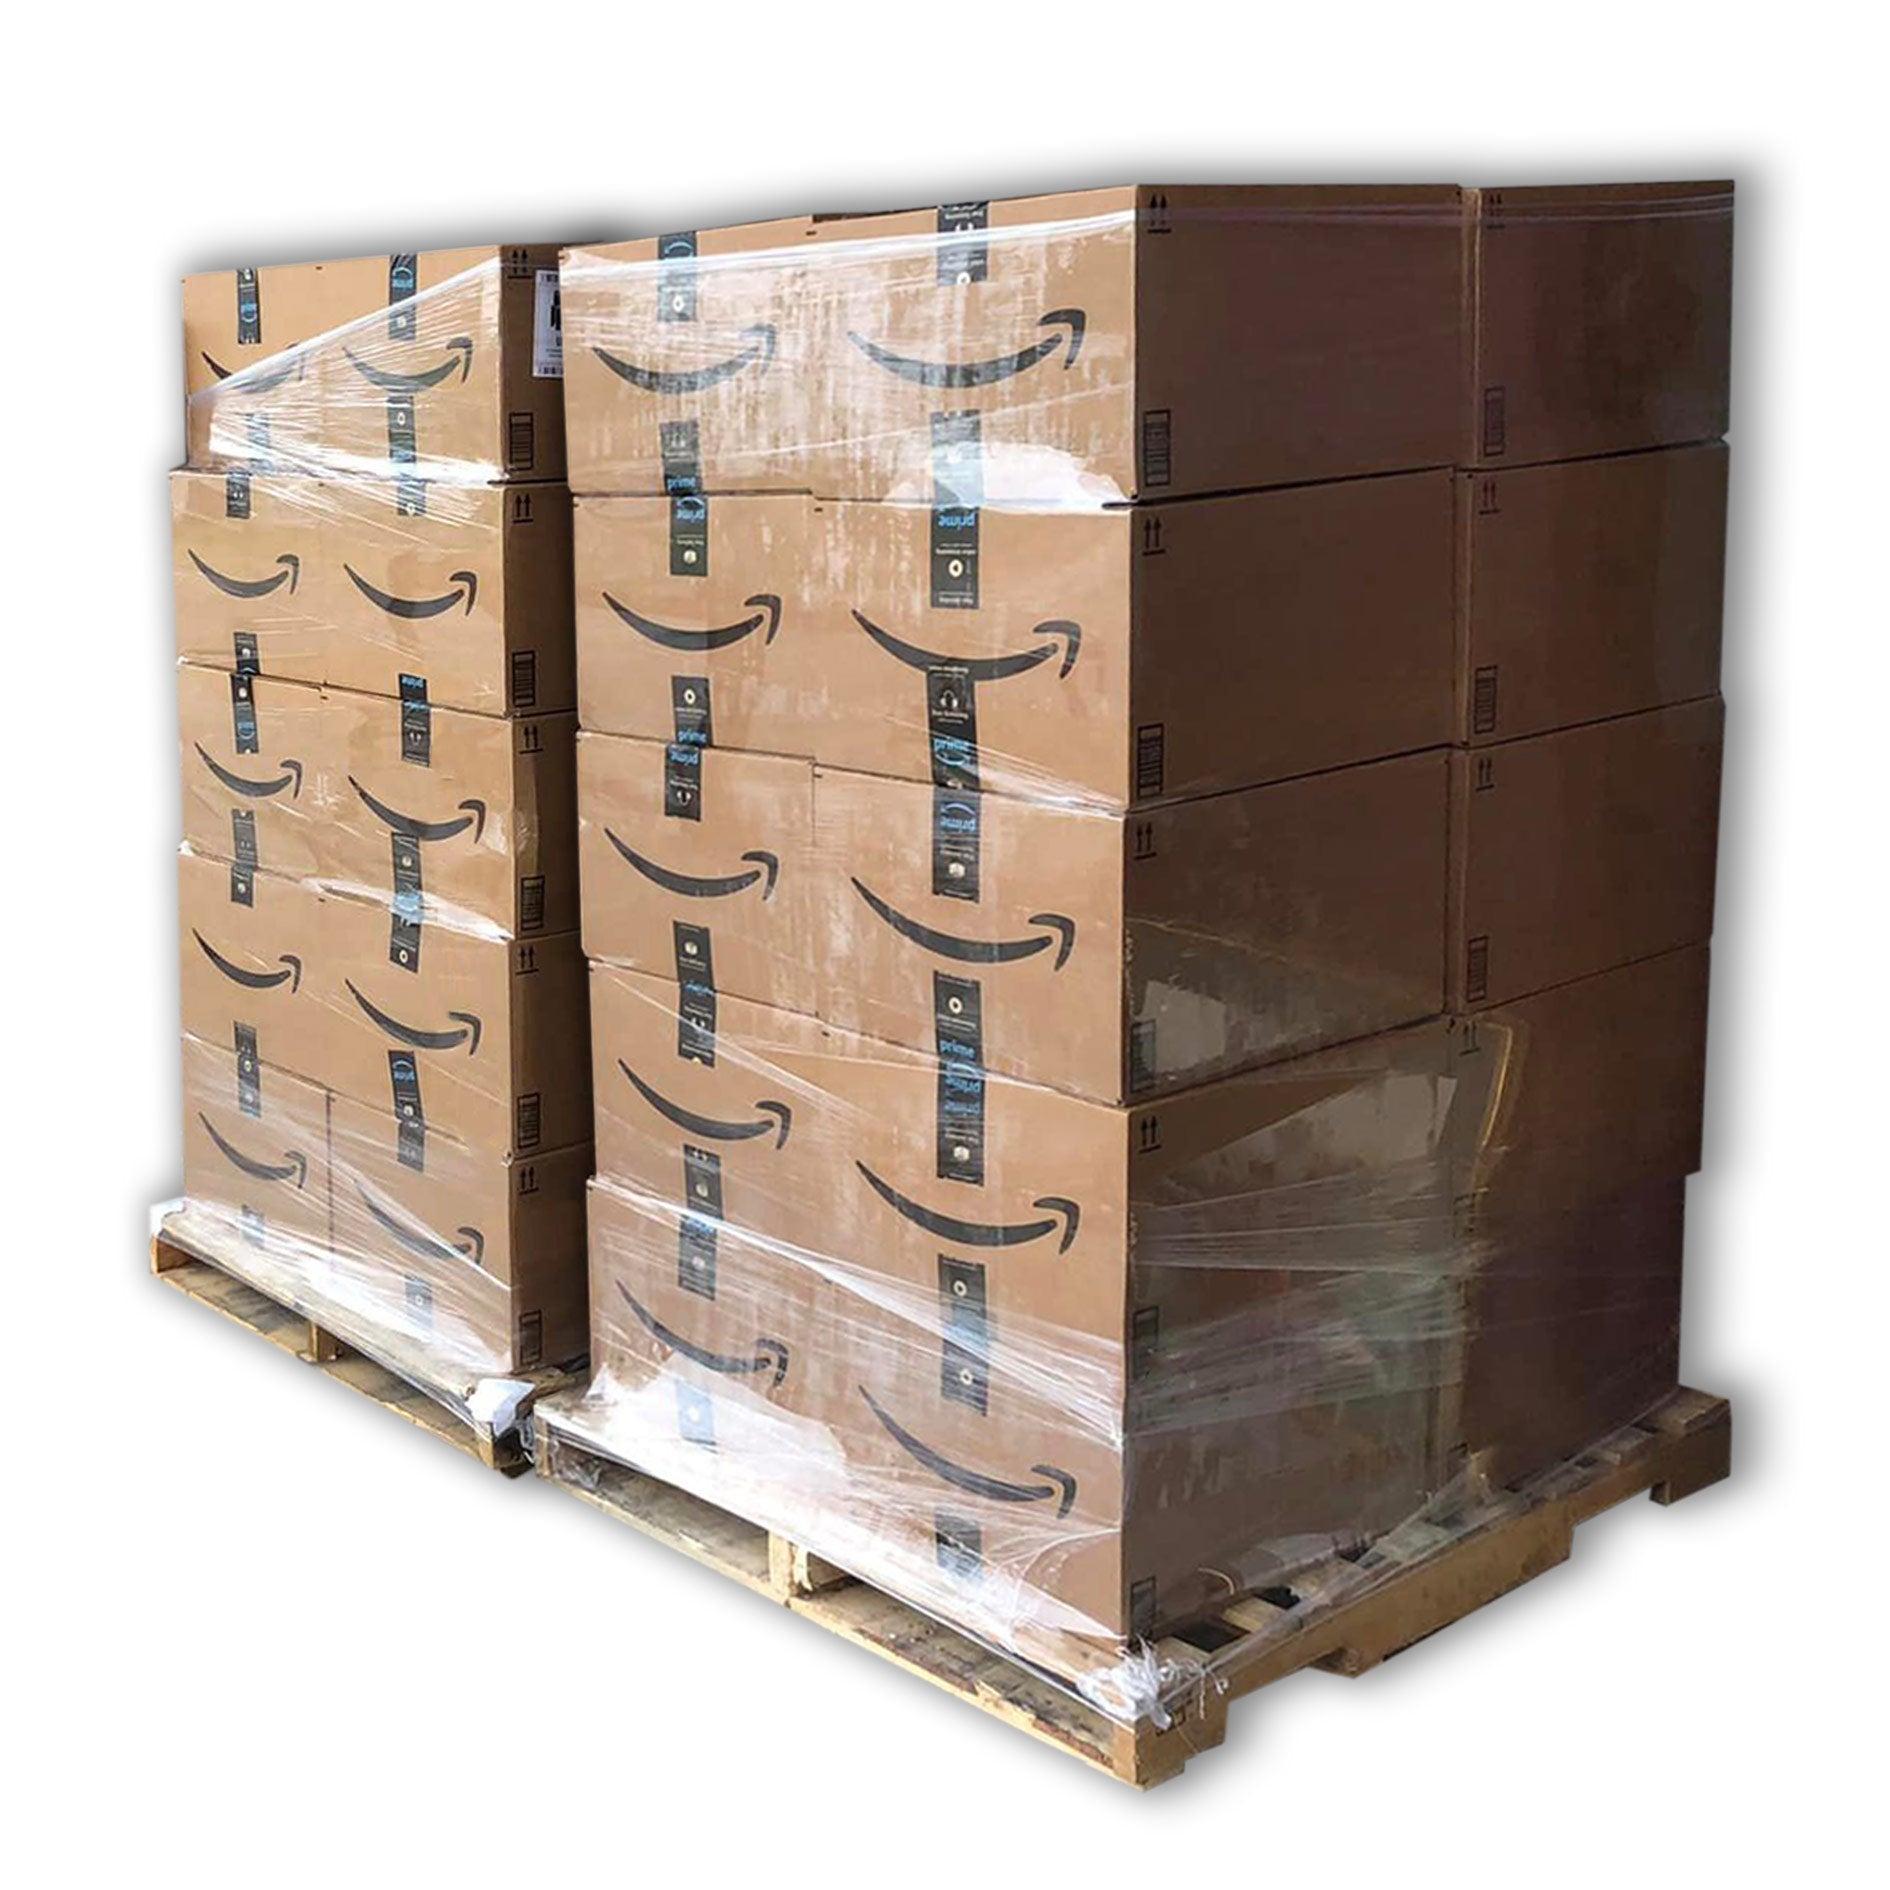 Amazon mystery boxes liquiditys liquidation truckloads 24 pallets